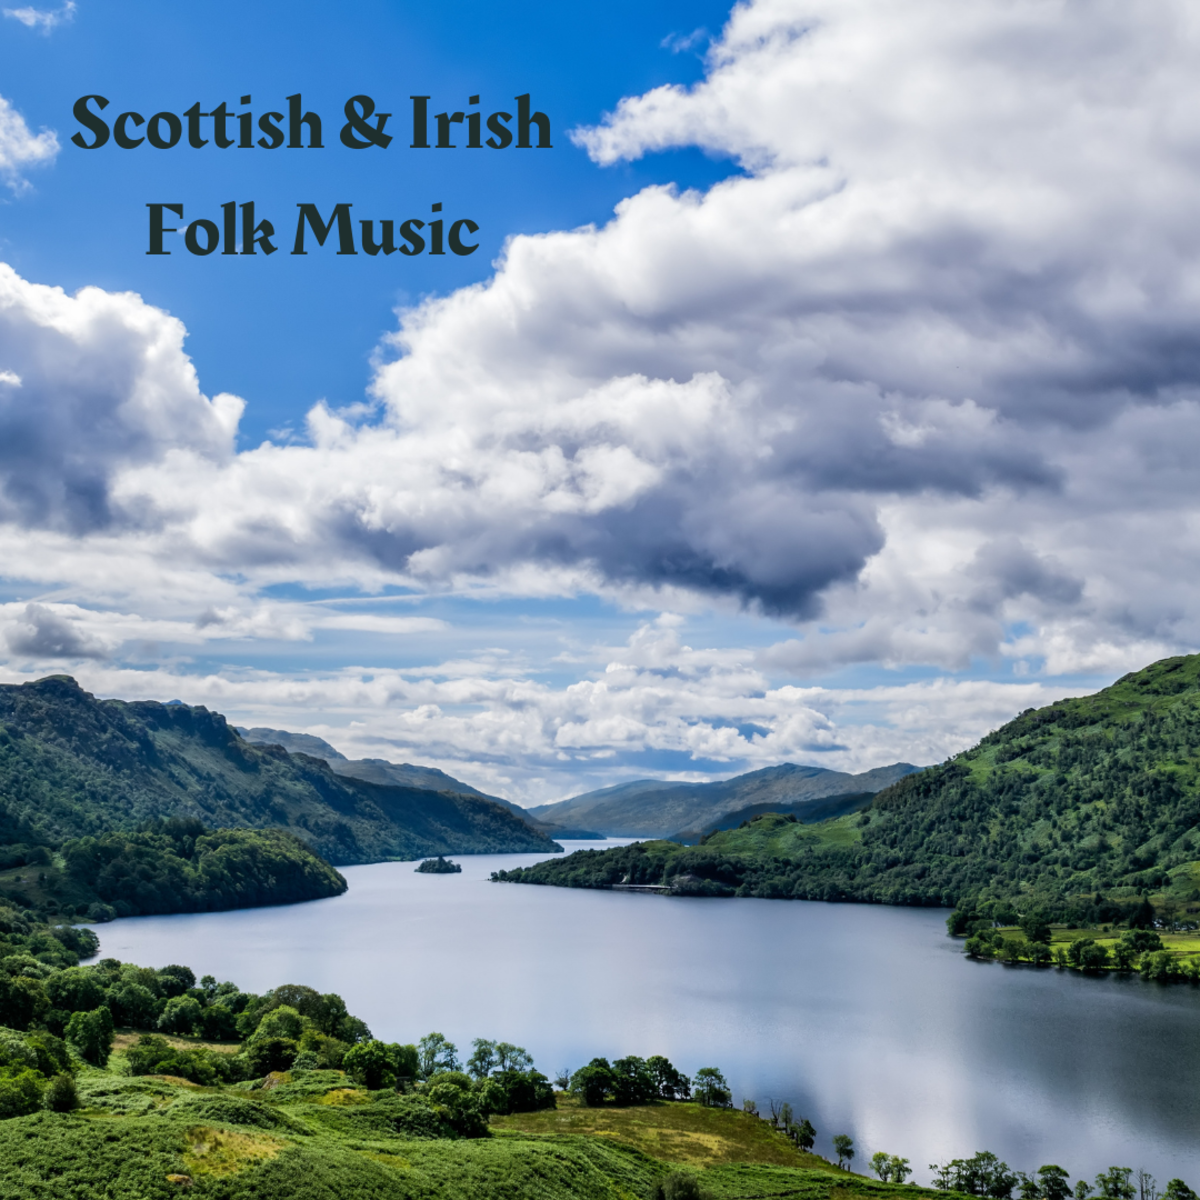 Seven Scottish or Irish Folk Songs: Music and History